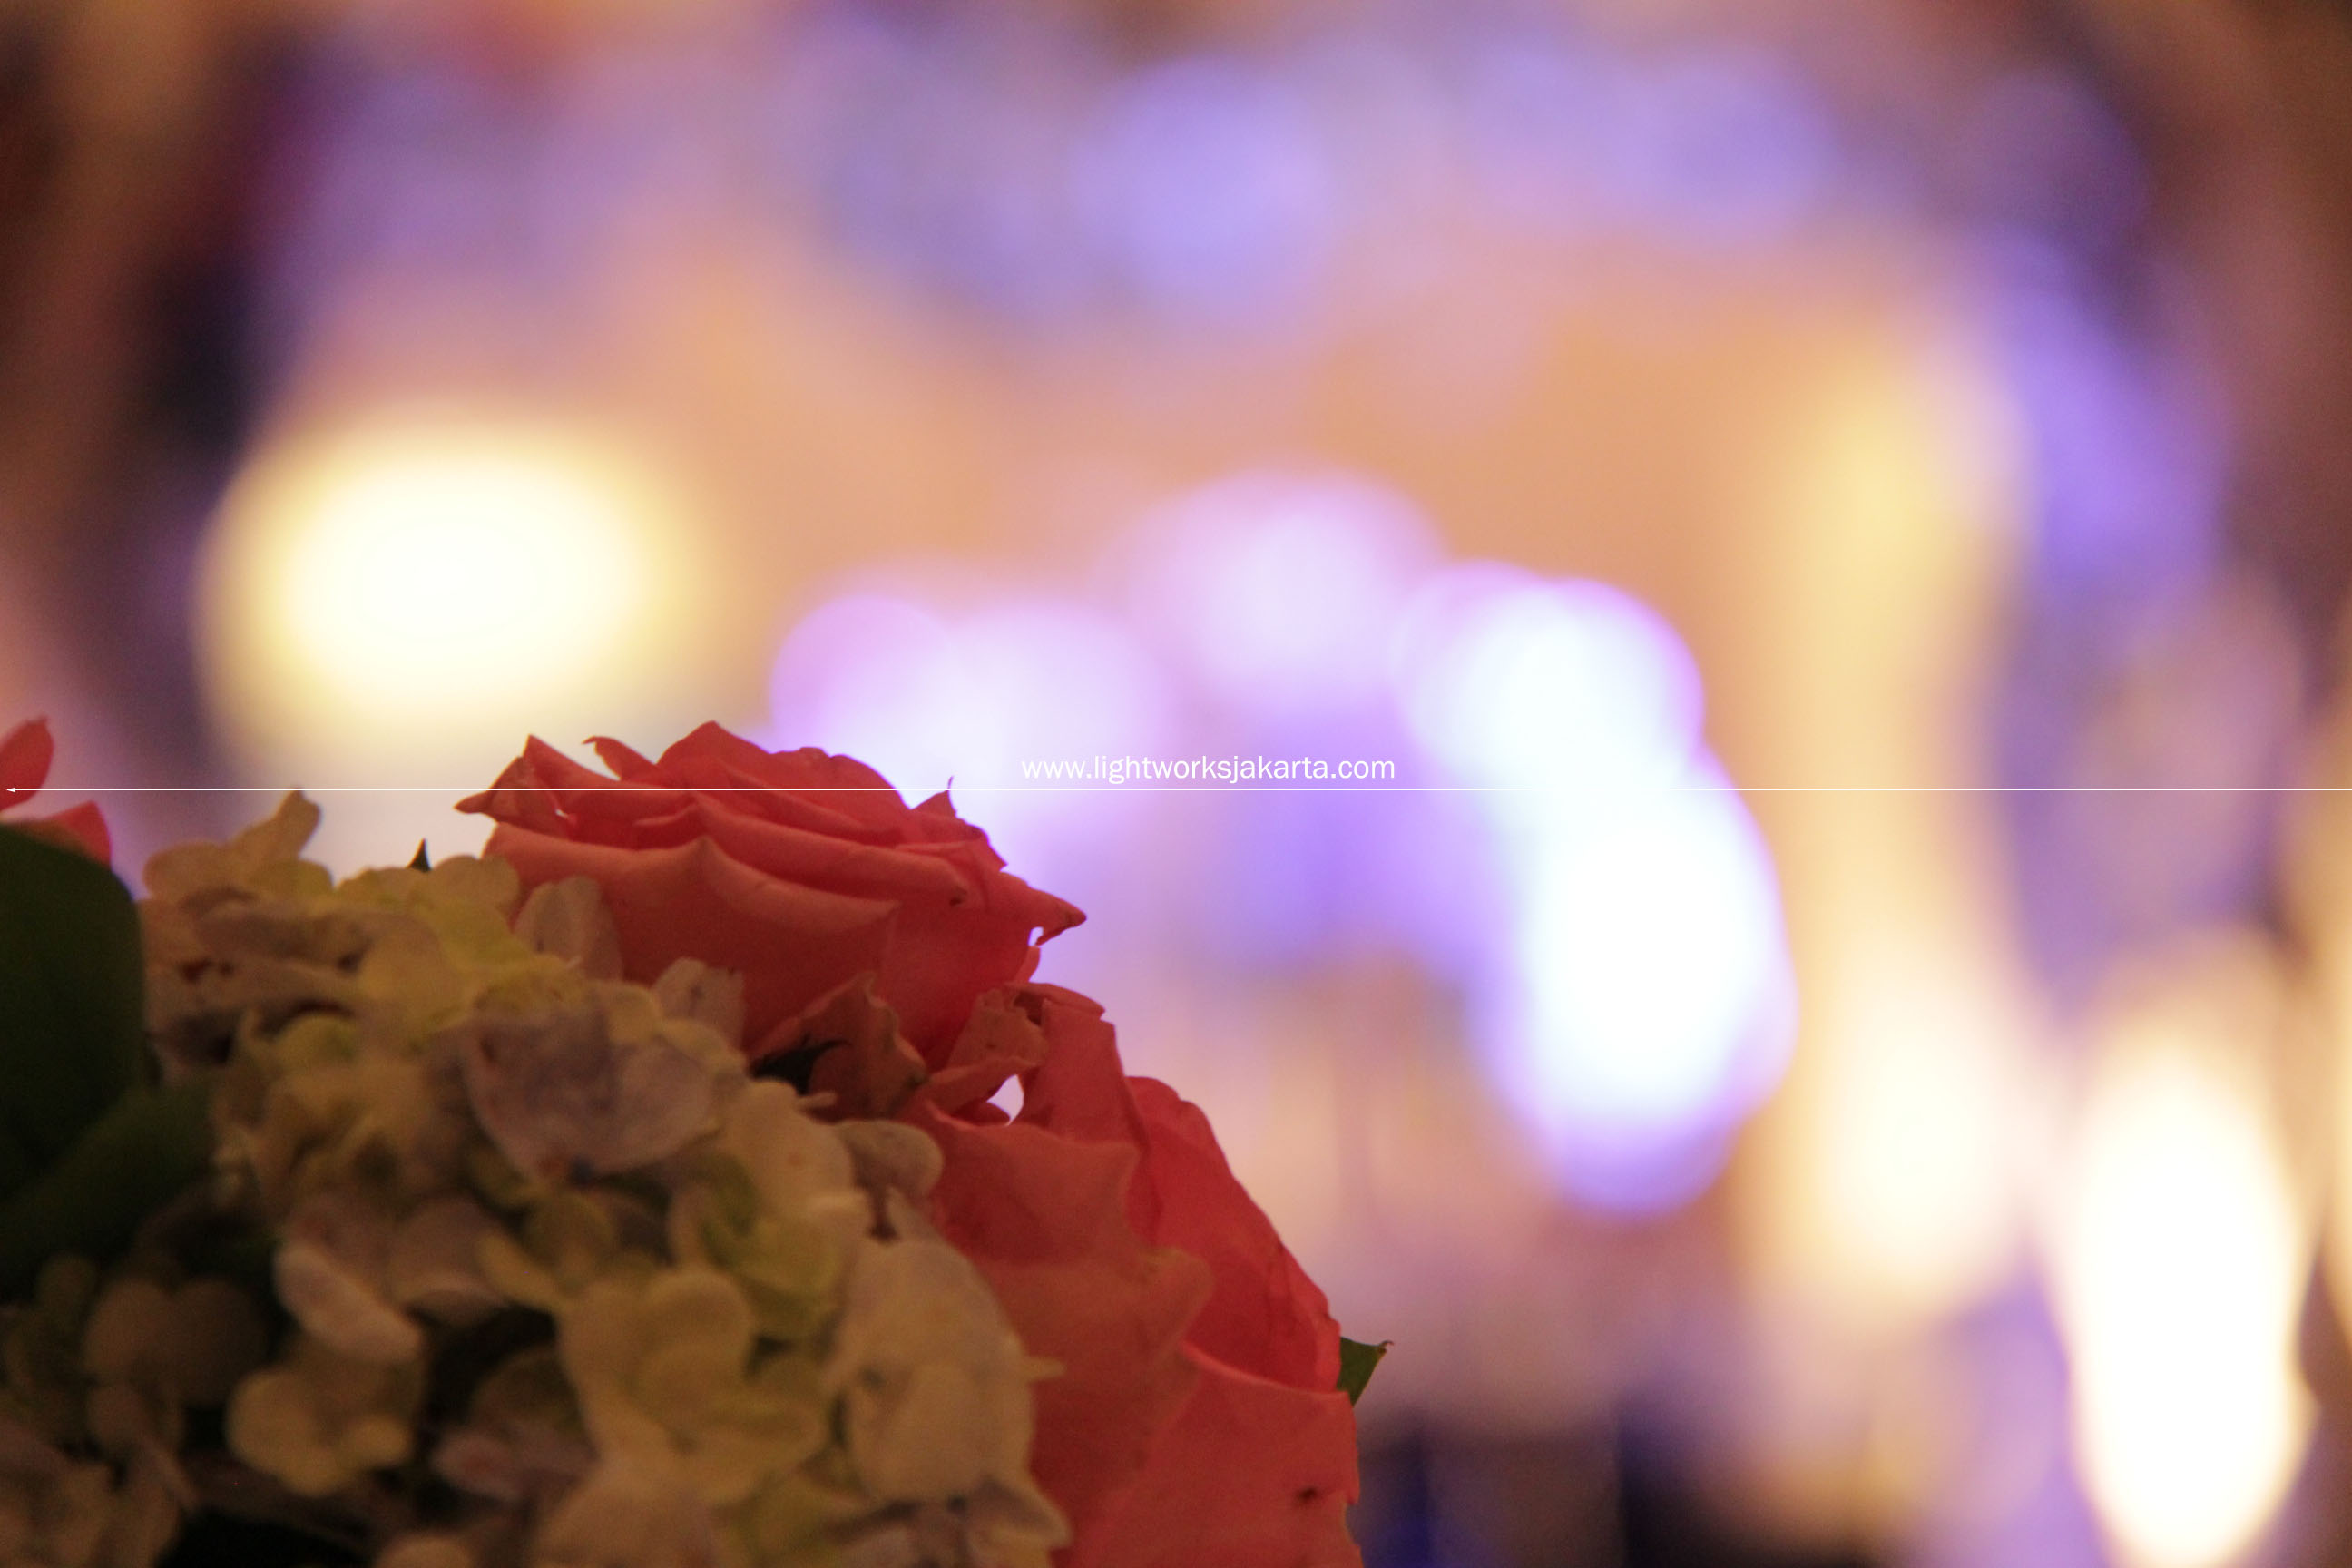 Edo Hokandar and Andriani Christianty’s Wedding; Venue at Ritz Carlton Pacific Place; Decoration by Feronique Tessa Hariawan & Stephanus F&F; Lighting by Lightworks